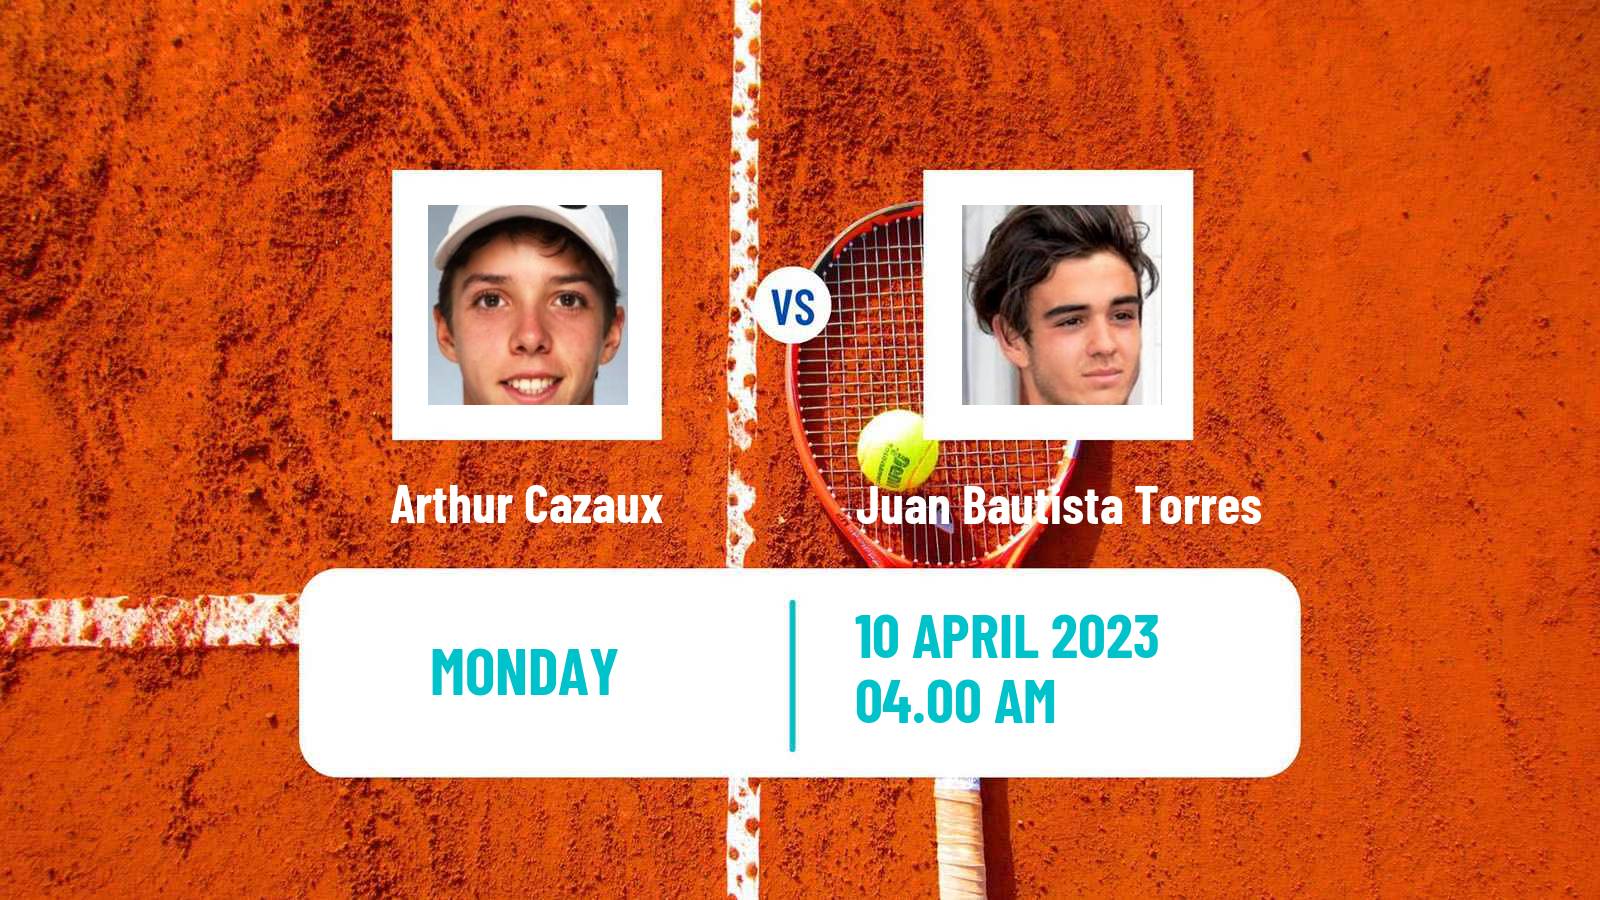 Tennis ATP Challenger Arthur Cazaux - Juan Bautista Torres